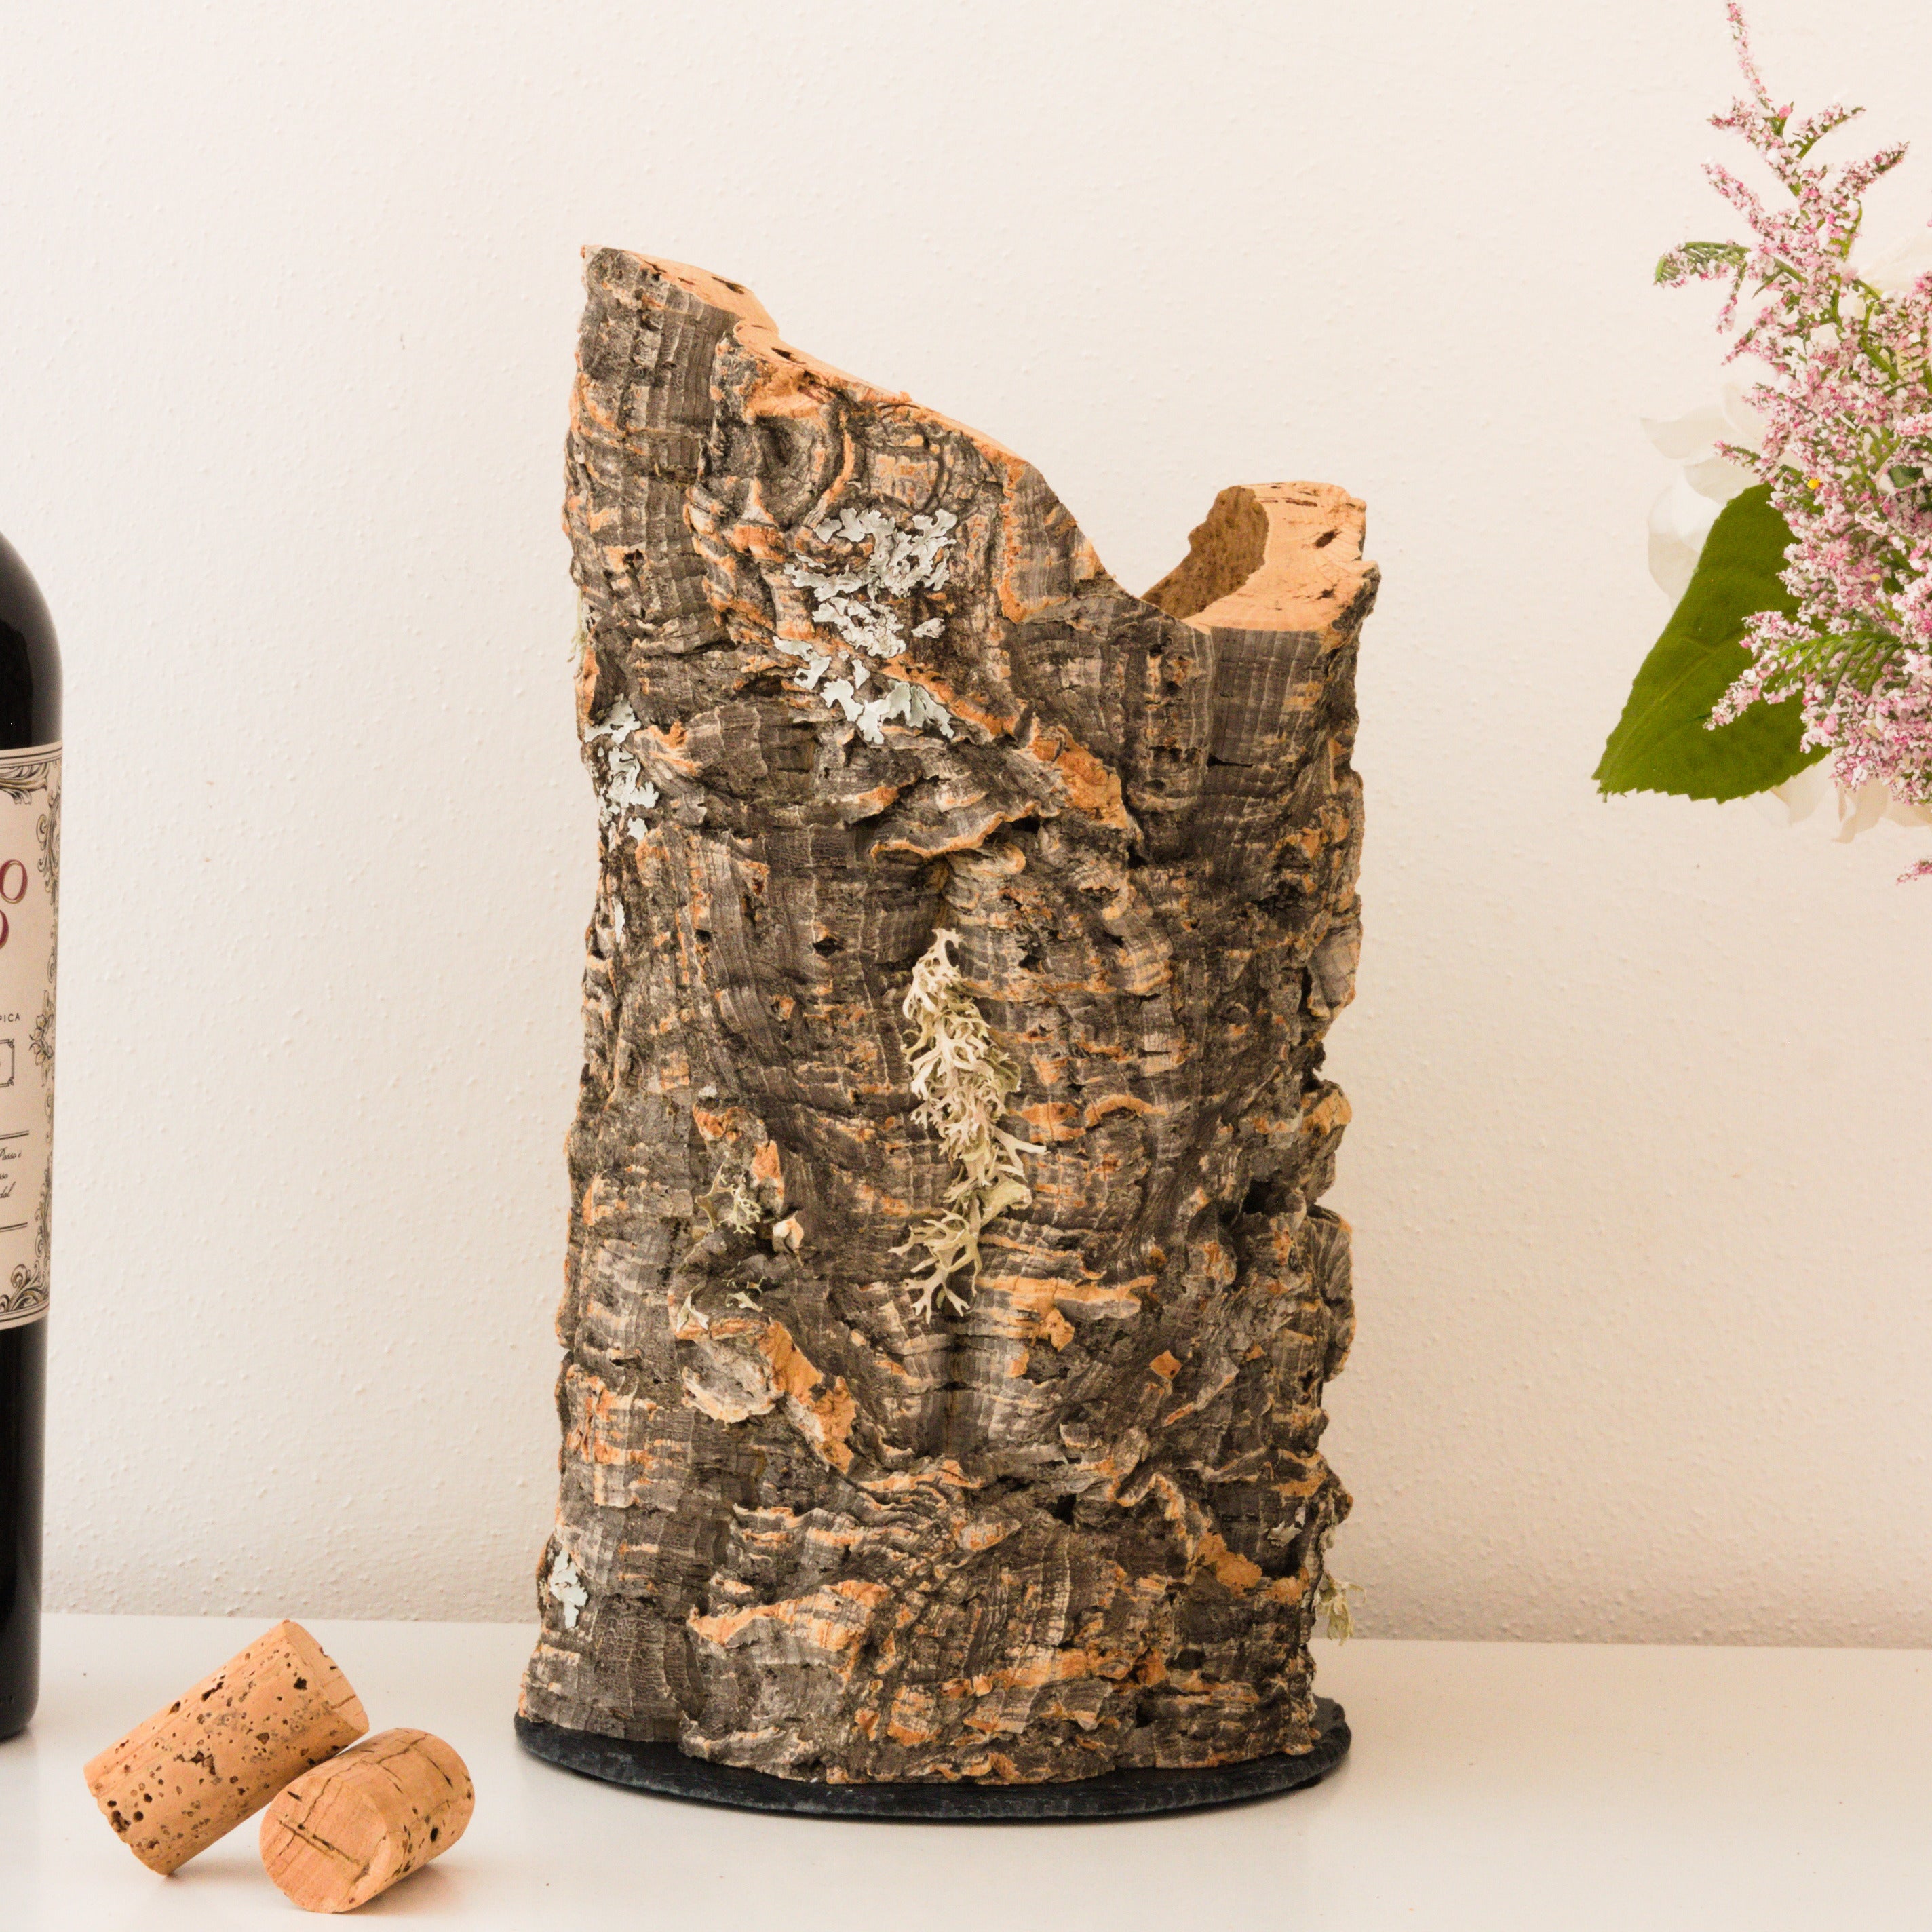 verKORKst premium wine stand made of cork * presentation of wine bottles * serving of wine * decoration of wine * lantern